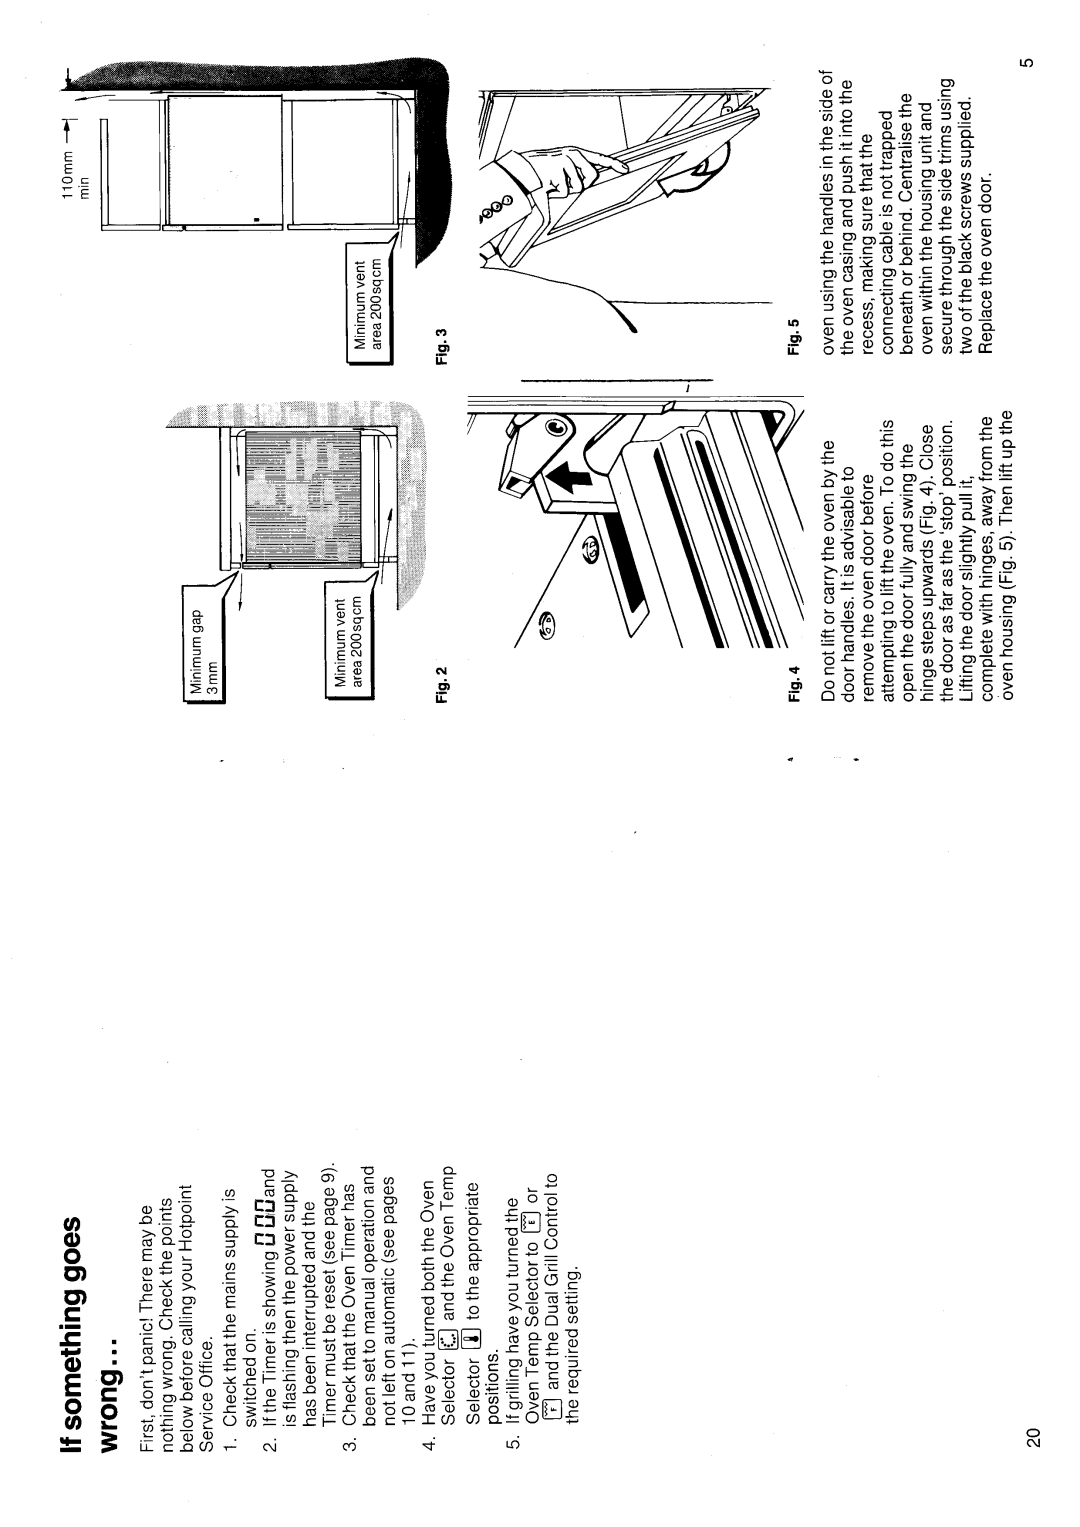 Hotpoint 6140 manual 